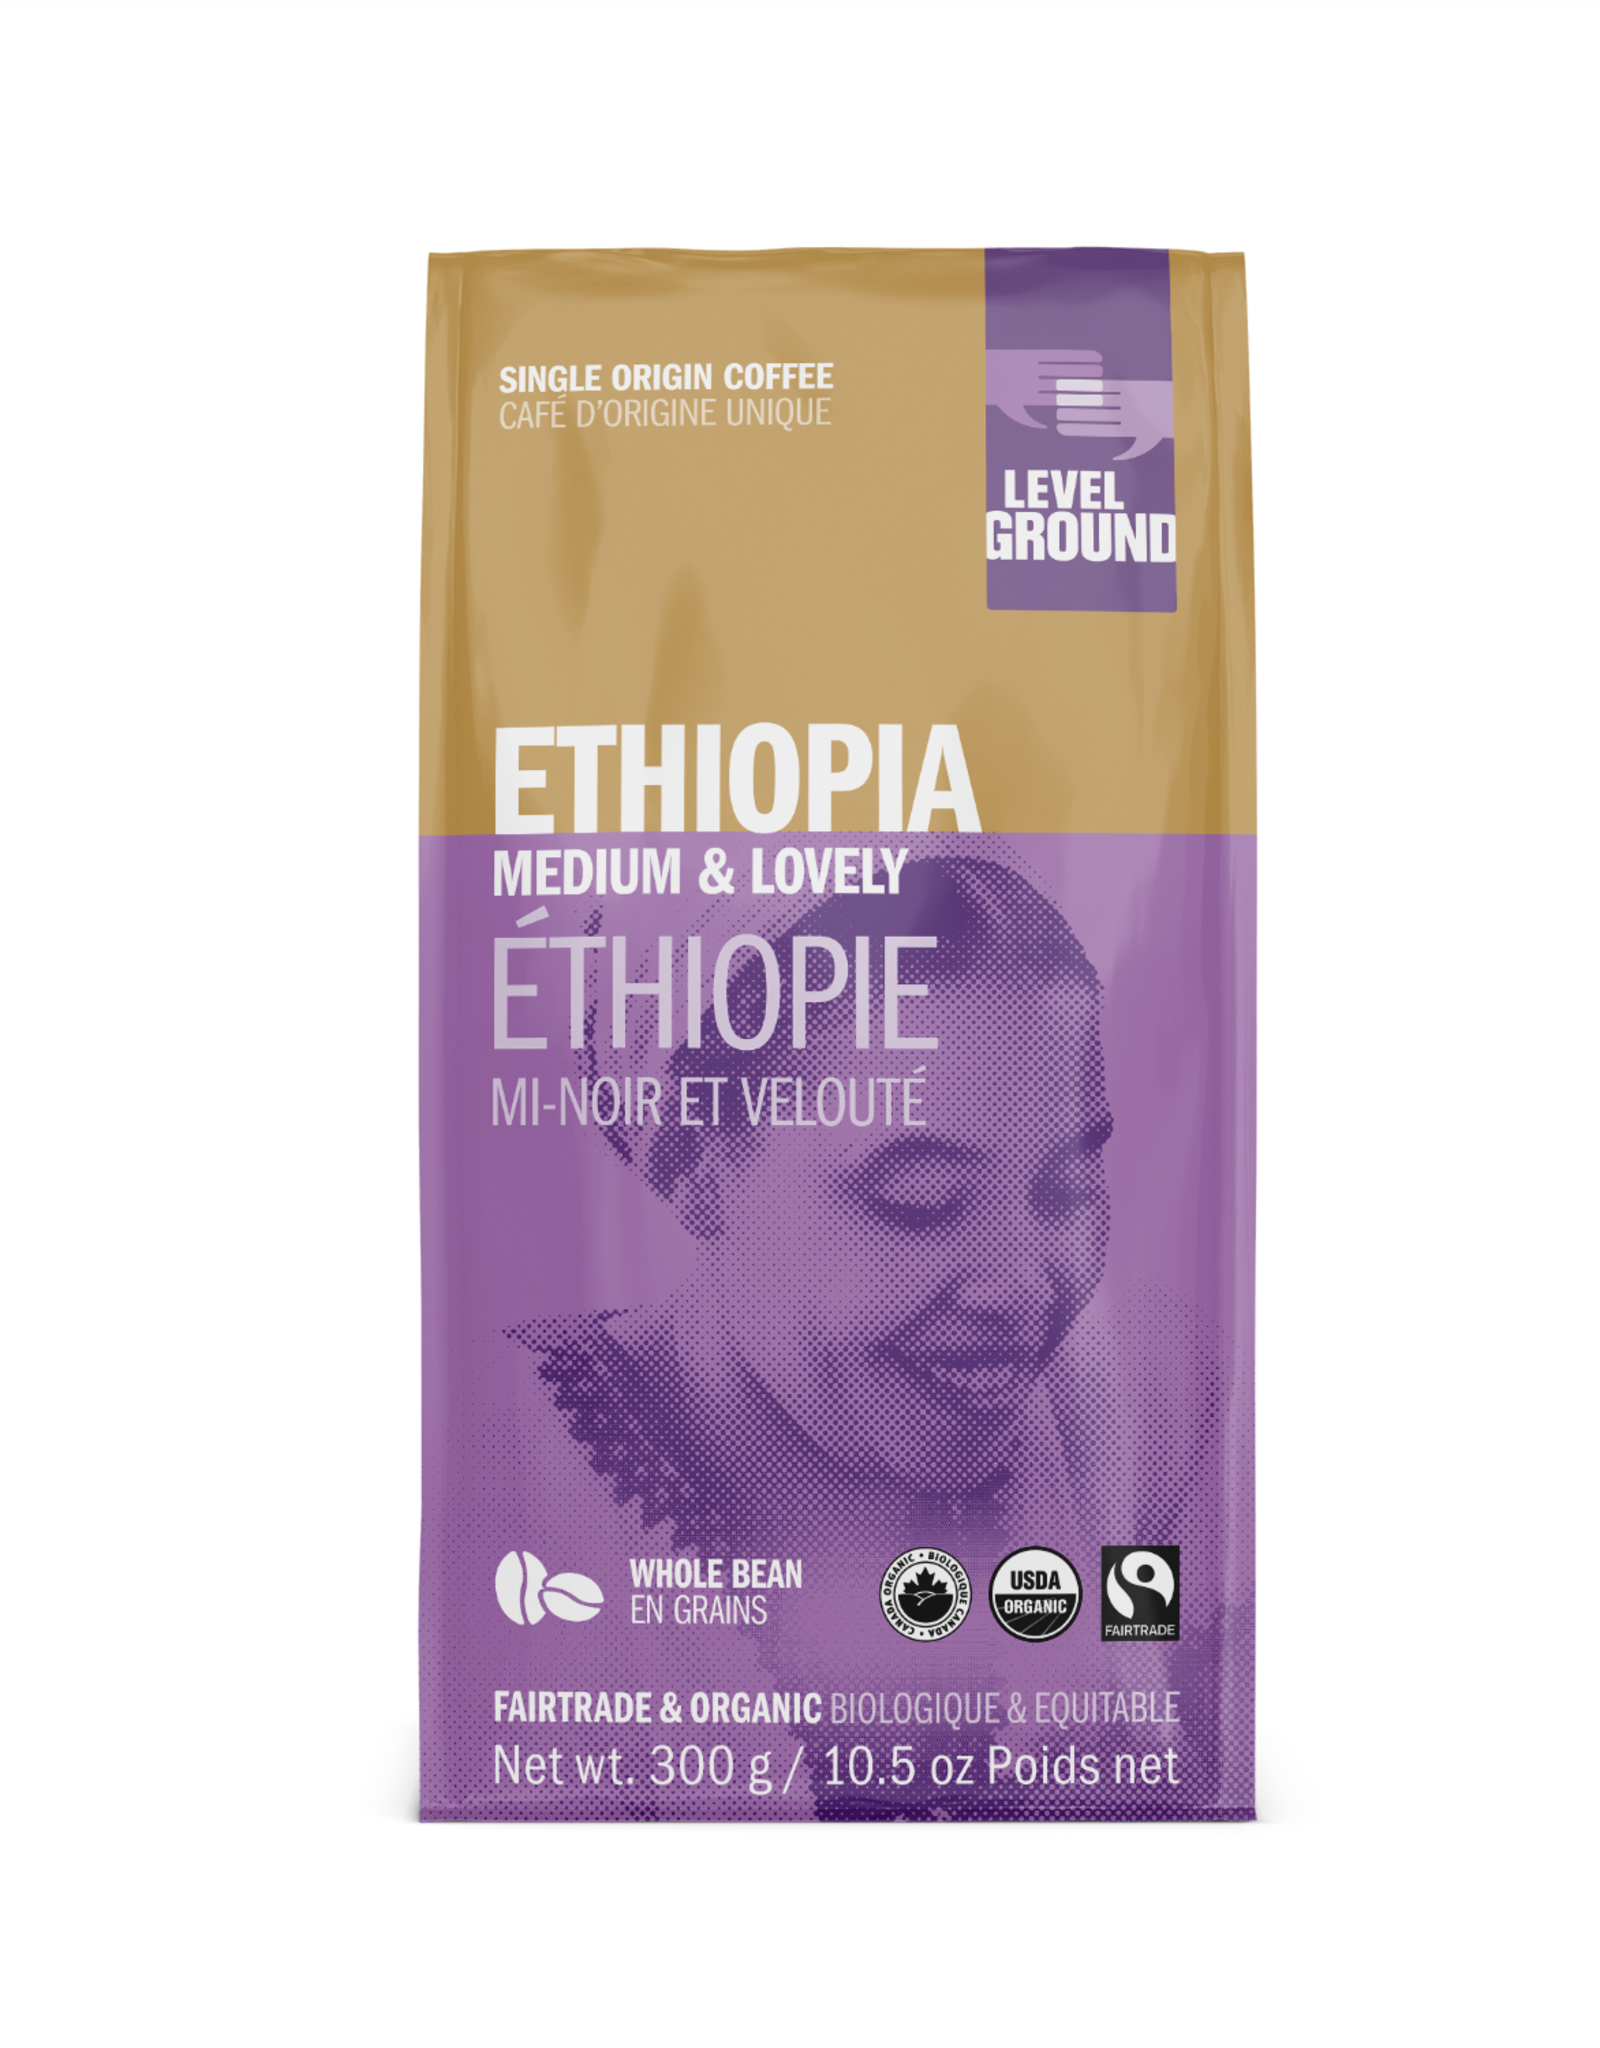 Level Ground Ethiopia Single Origin Coffee